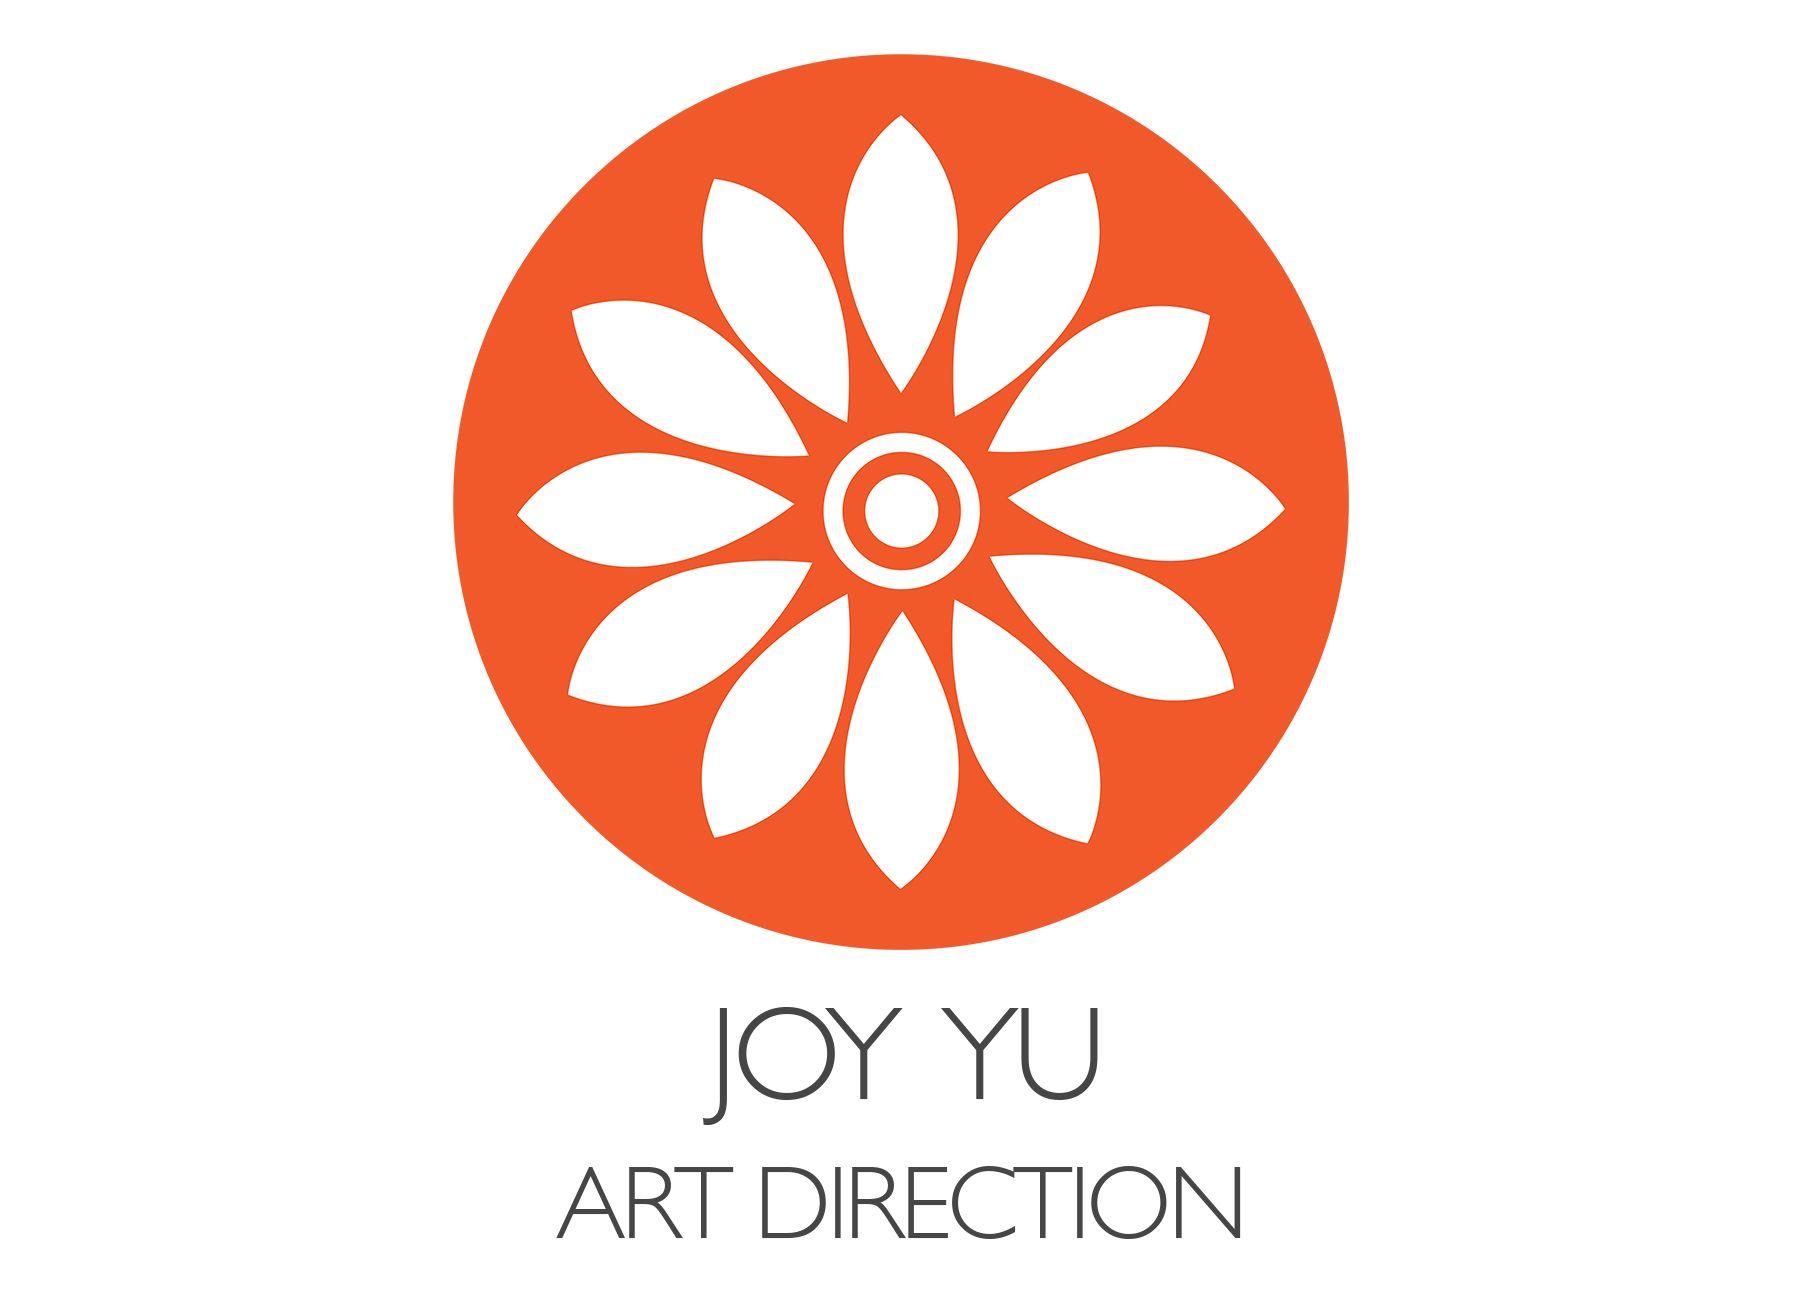 Yu Logo - Joy Yu